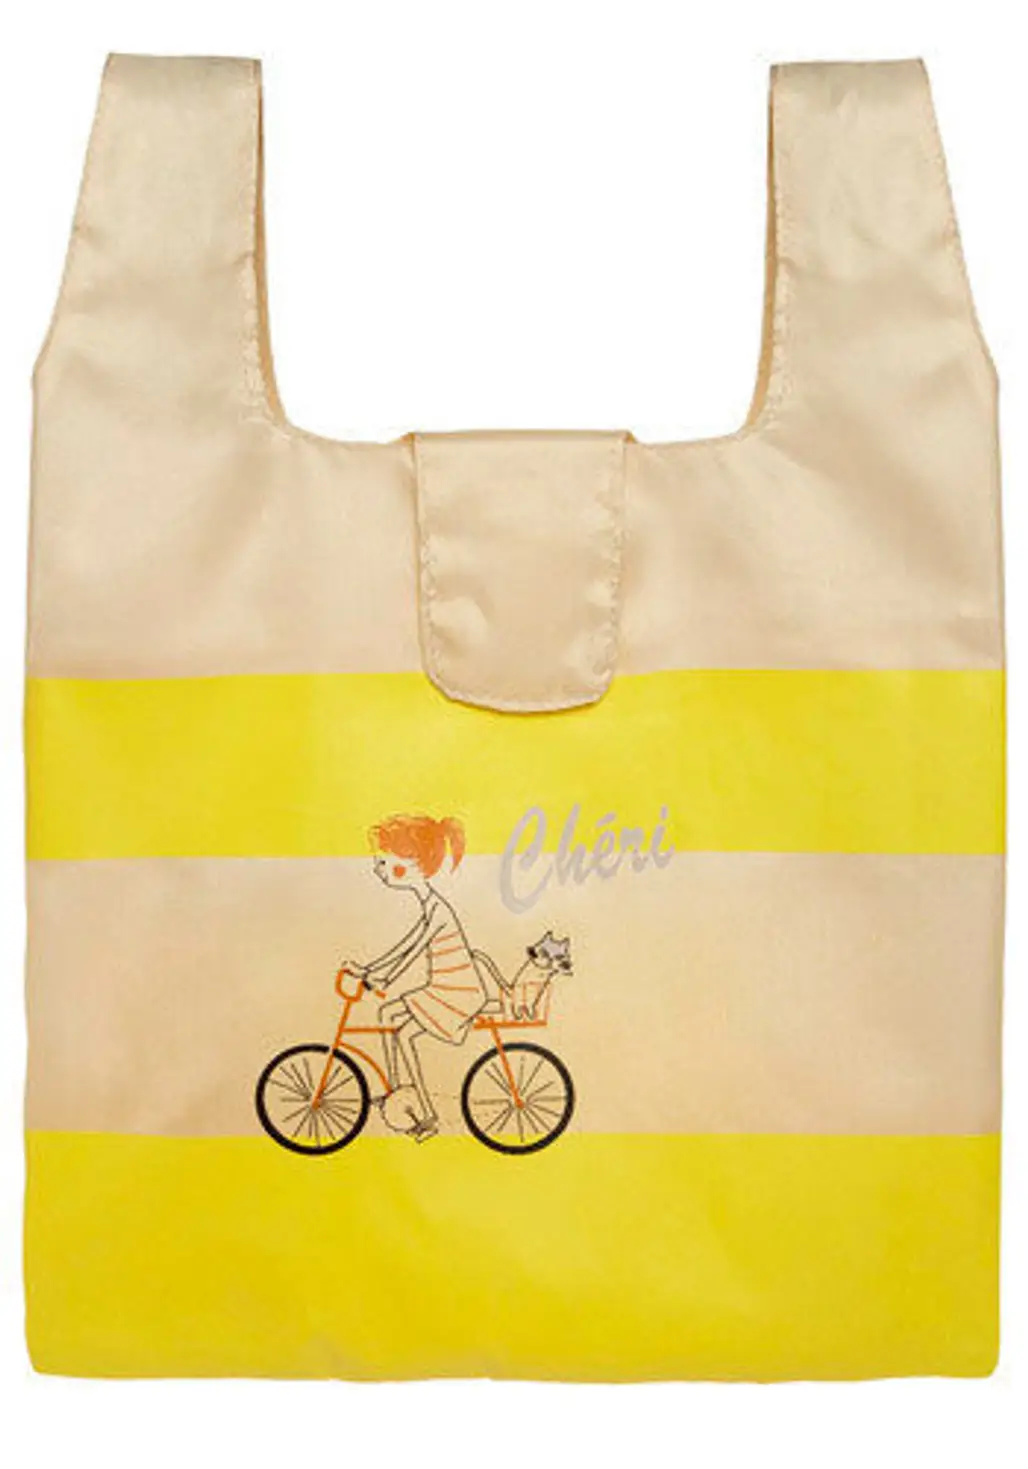 La Cycliste Lunch Bag